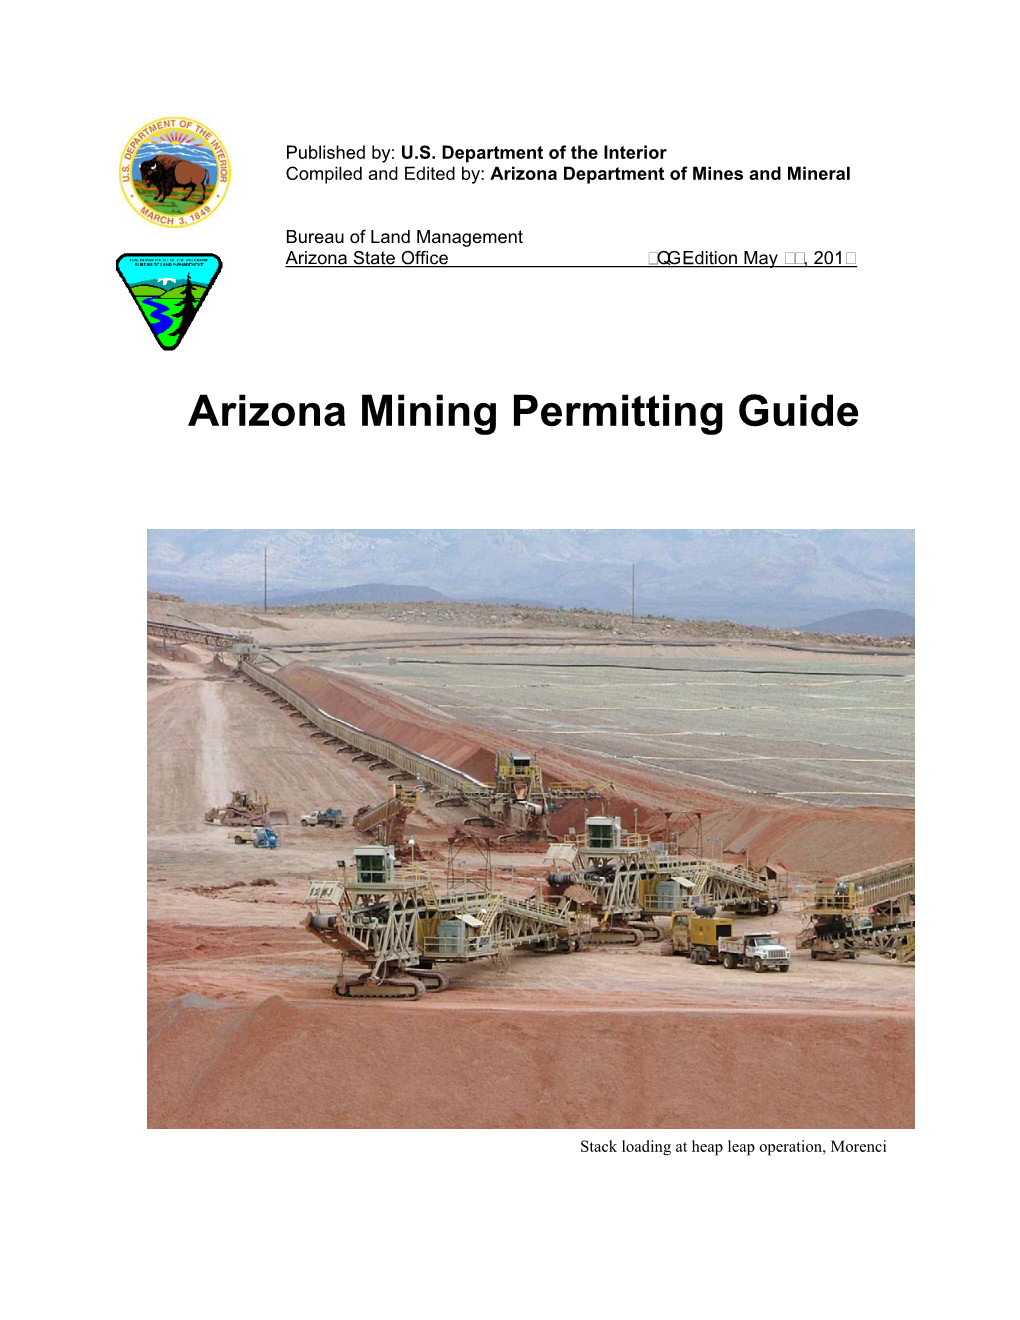 Arizona Mining Permitting Guide